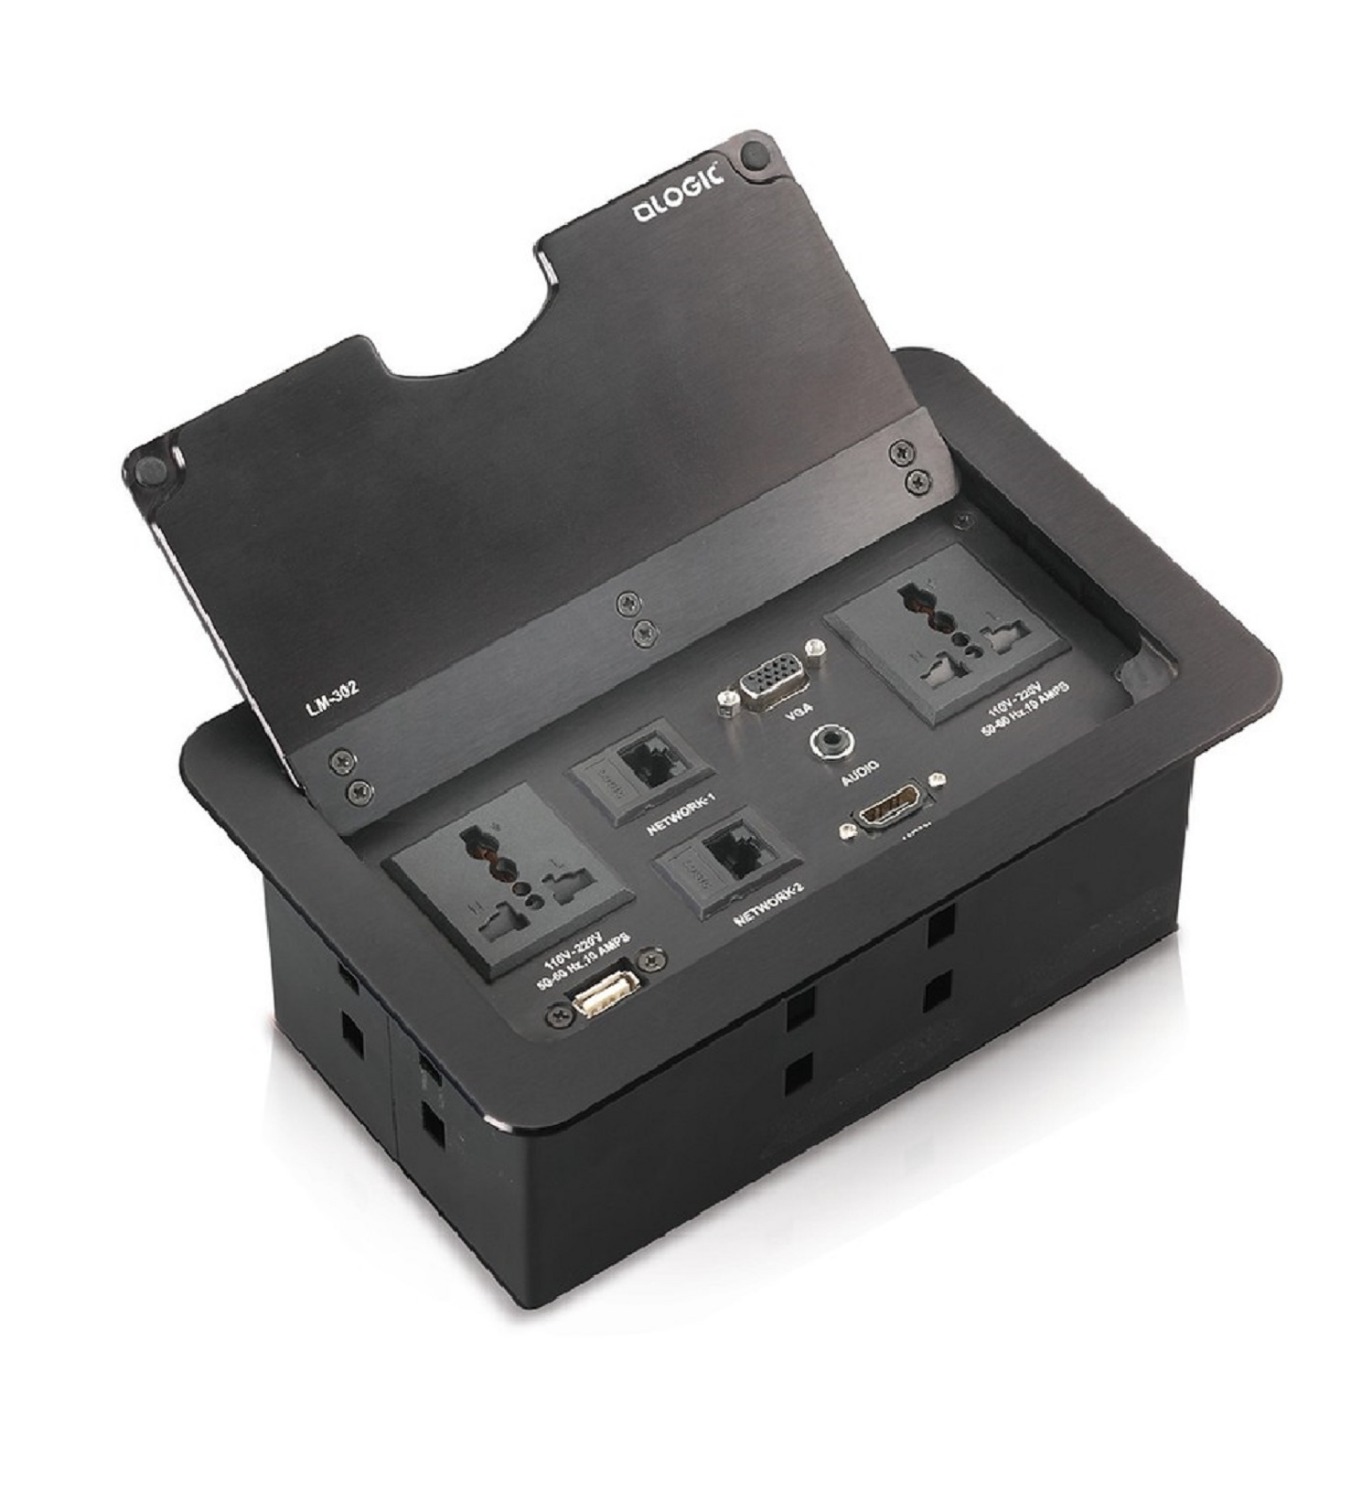 Logic AV LM 302 LOGIC Manual Desktop Box with RJ 45 x 2 / Audio